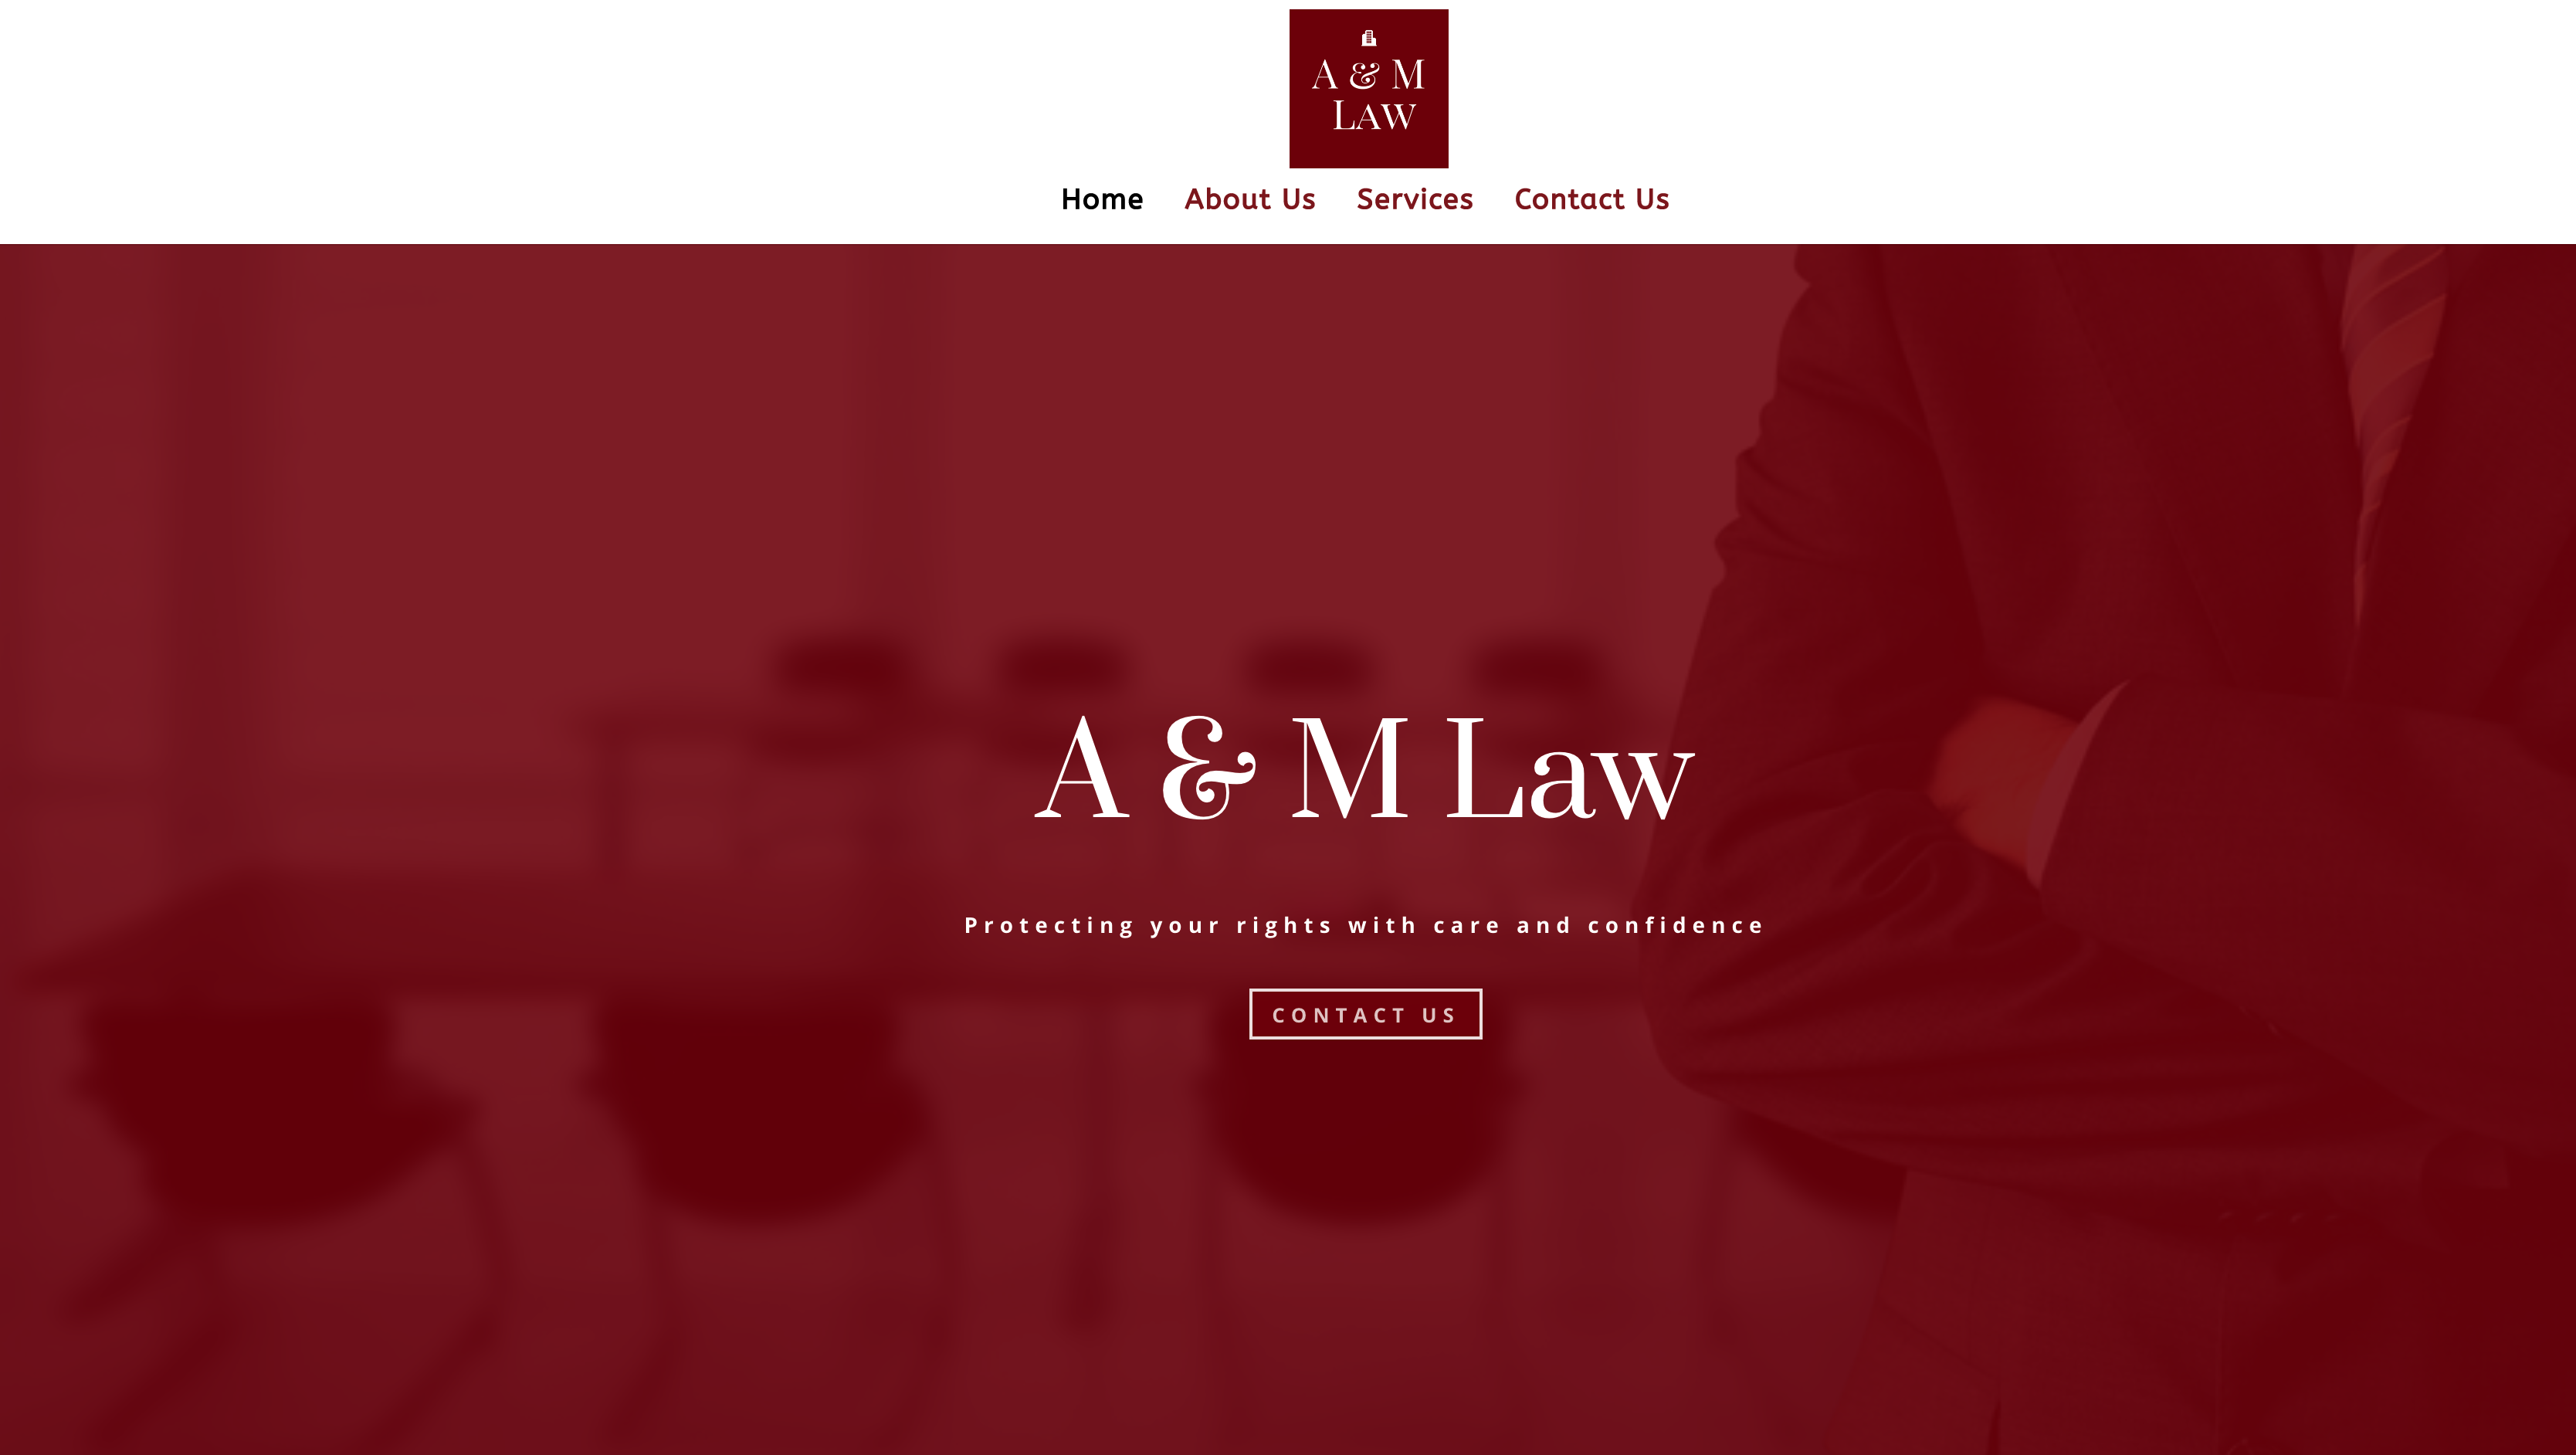 A&M Law